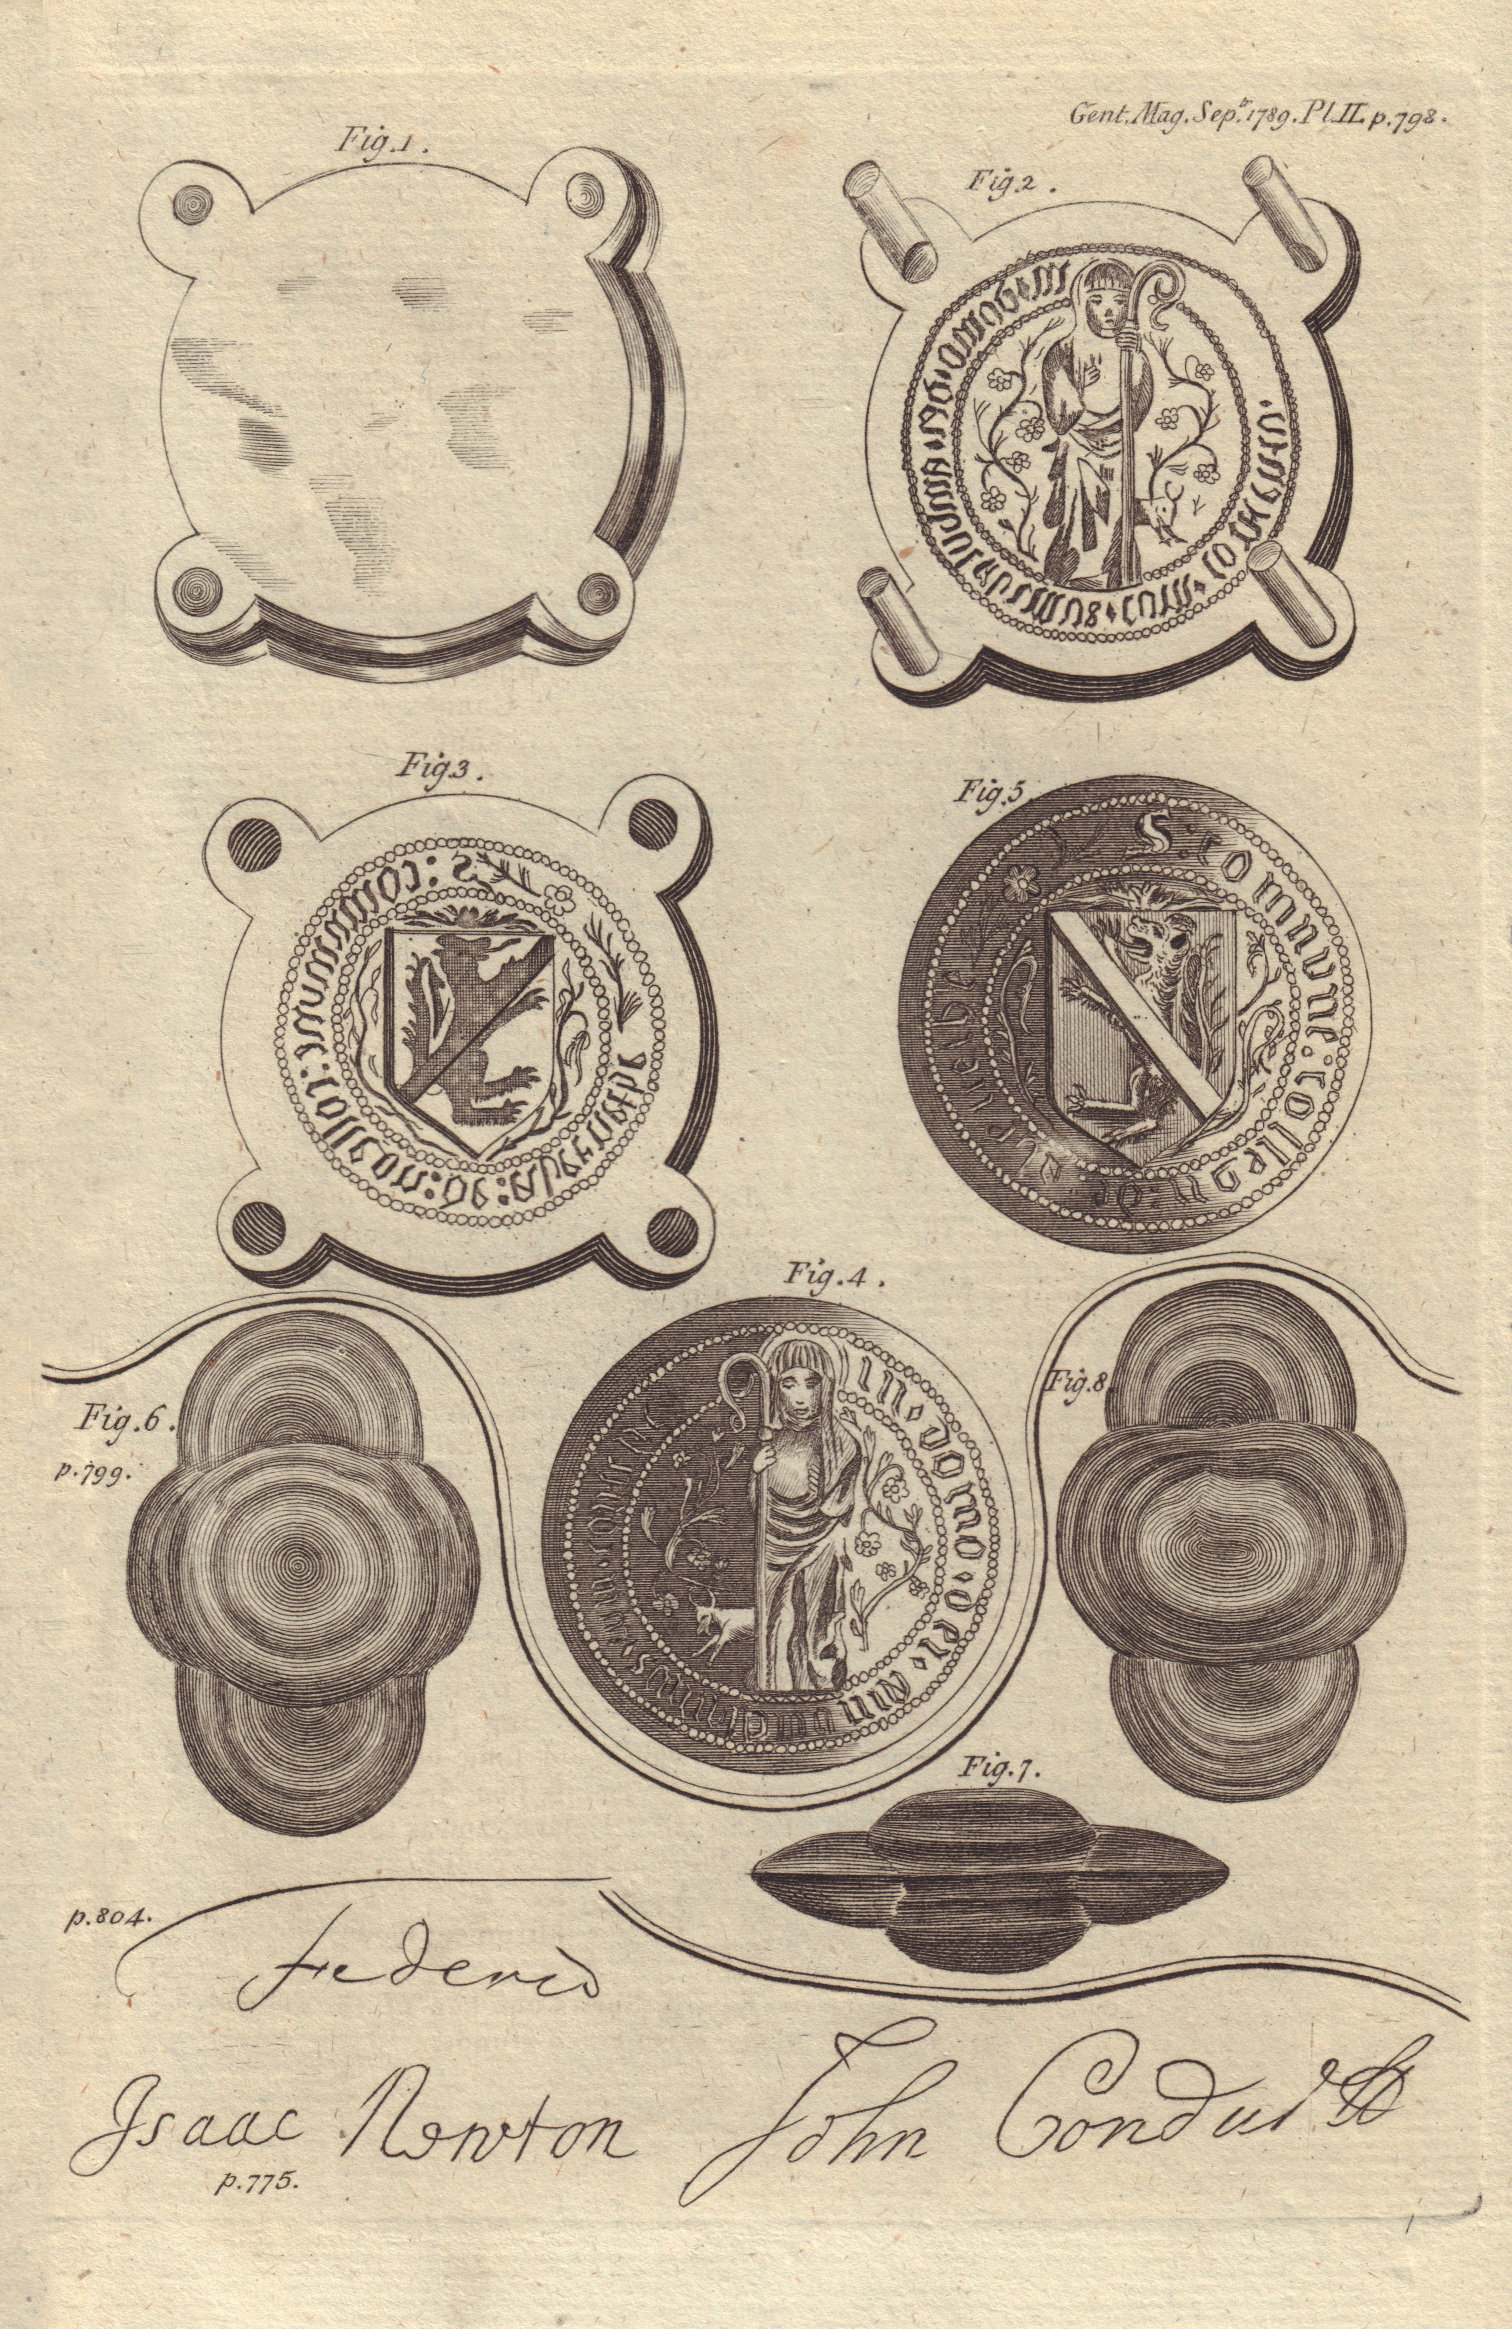 Associate Product Abernethy College seal. Isaac Newton John Conduitt Frederick III of Prussia 1789